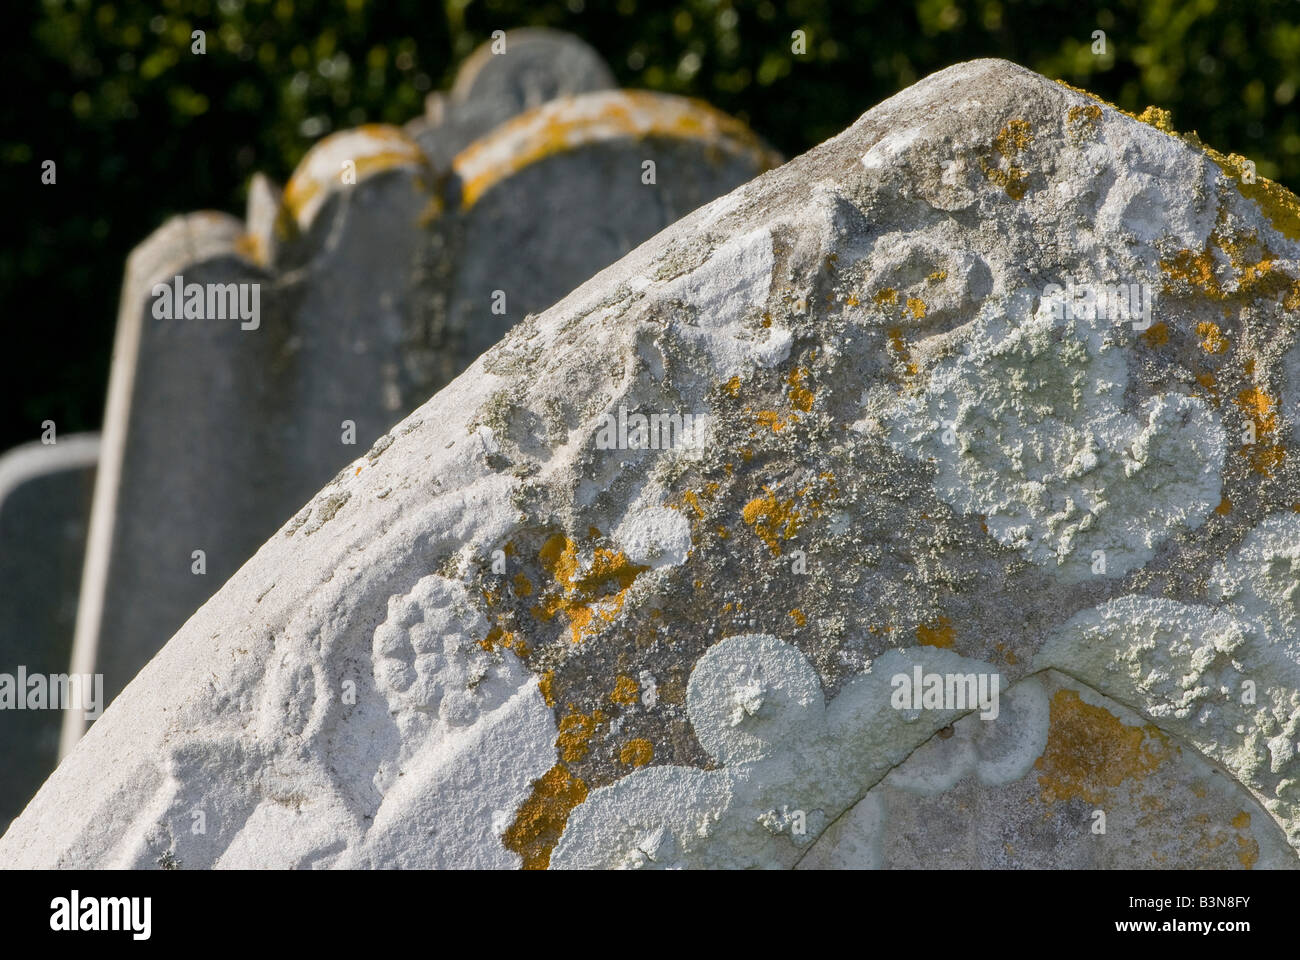 Lichen growing on a gravestone Stock Photo